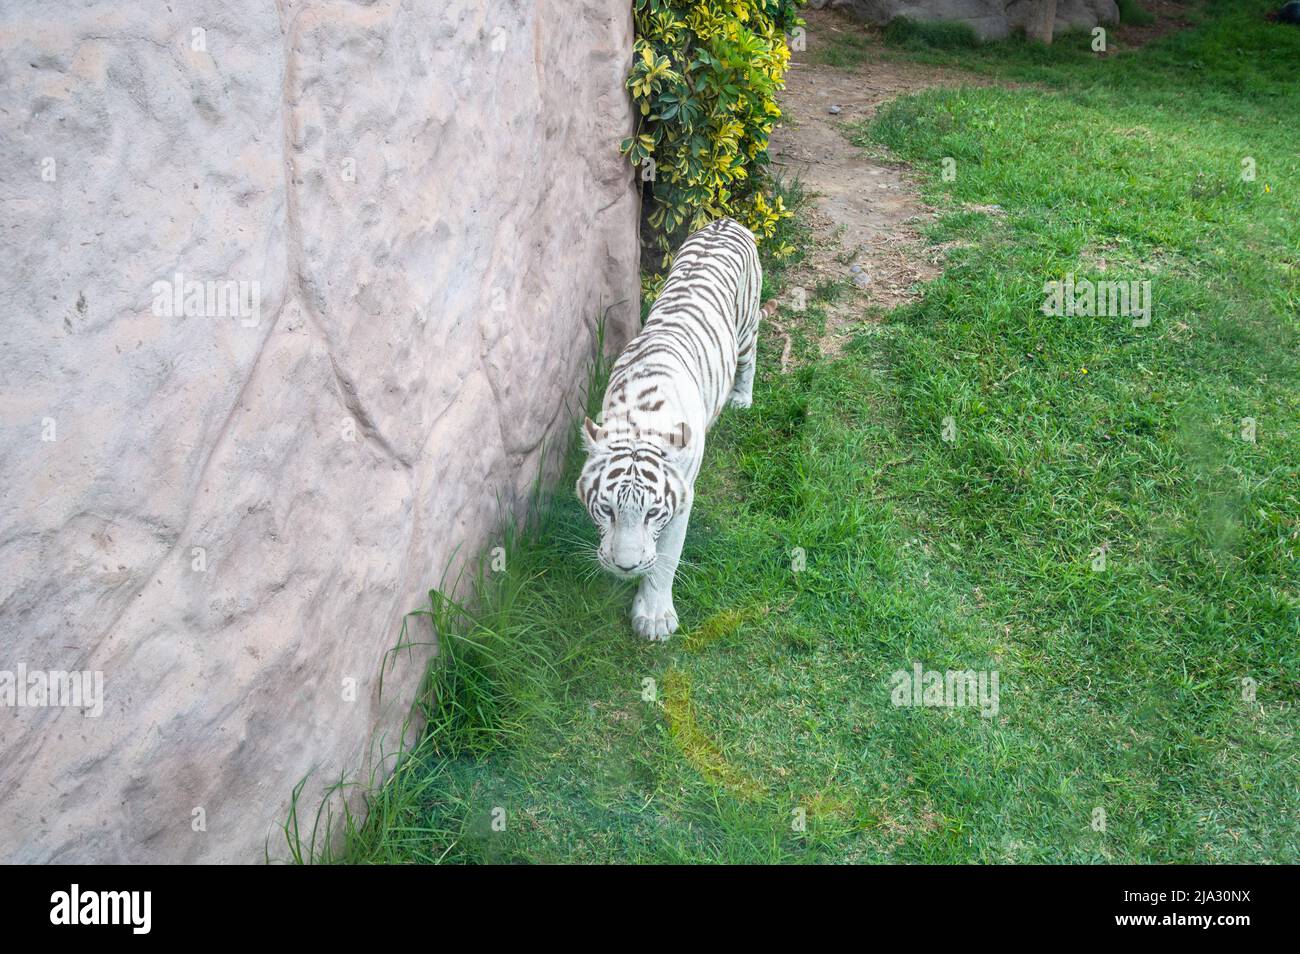 Beautiful white bengal tiger walking on the grass Stock Photo